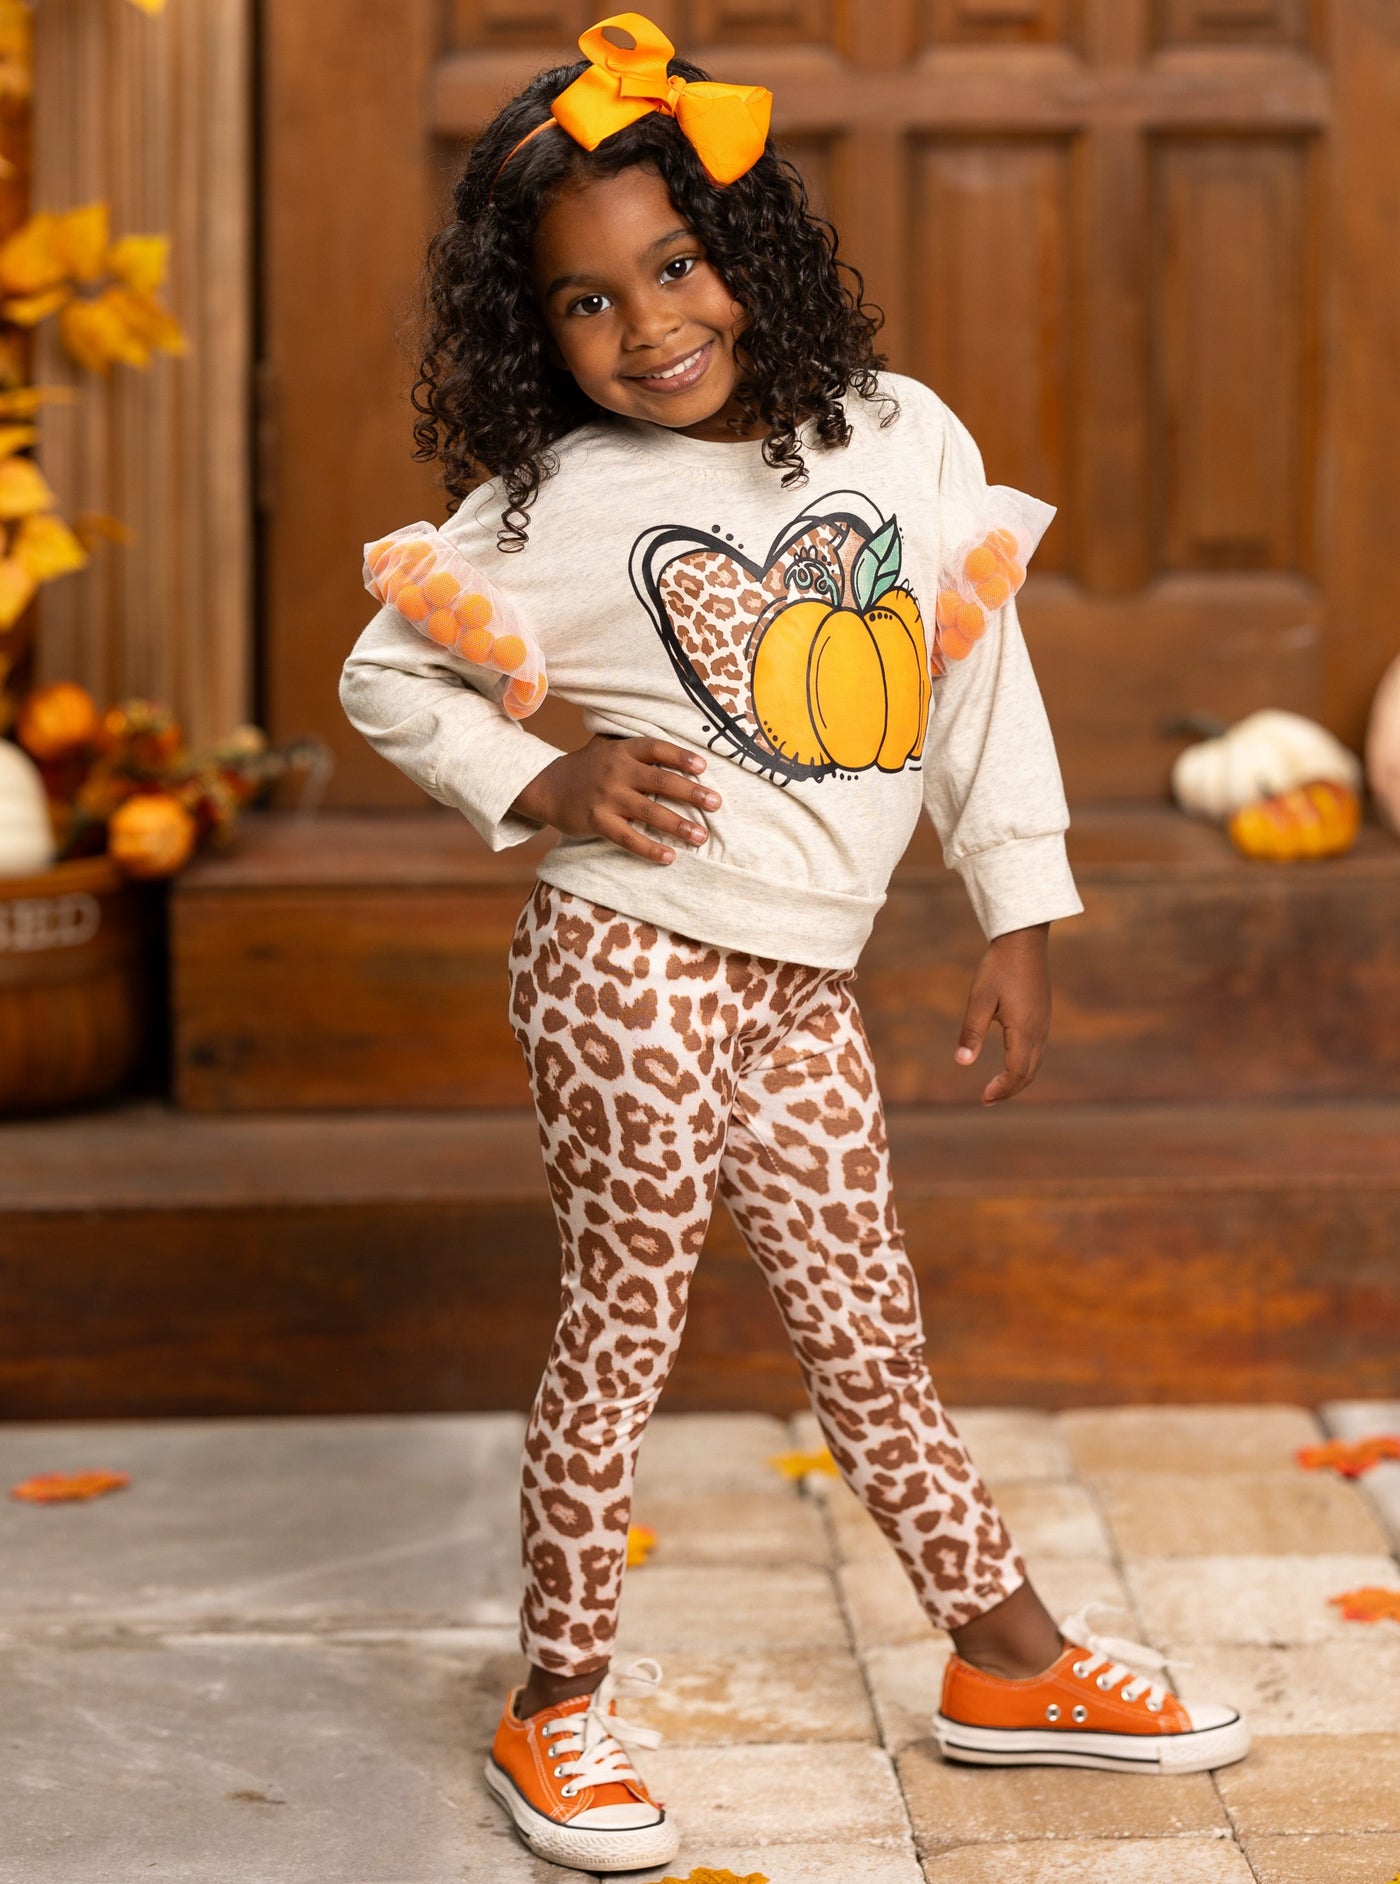 Toddler Fall Clothes | Pumpkin Pullover & Leopard Print Legging Set